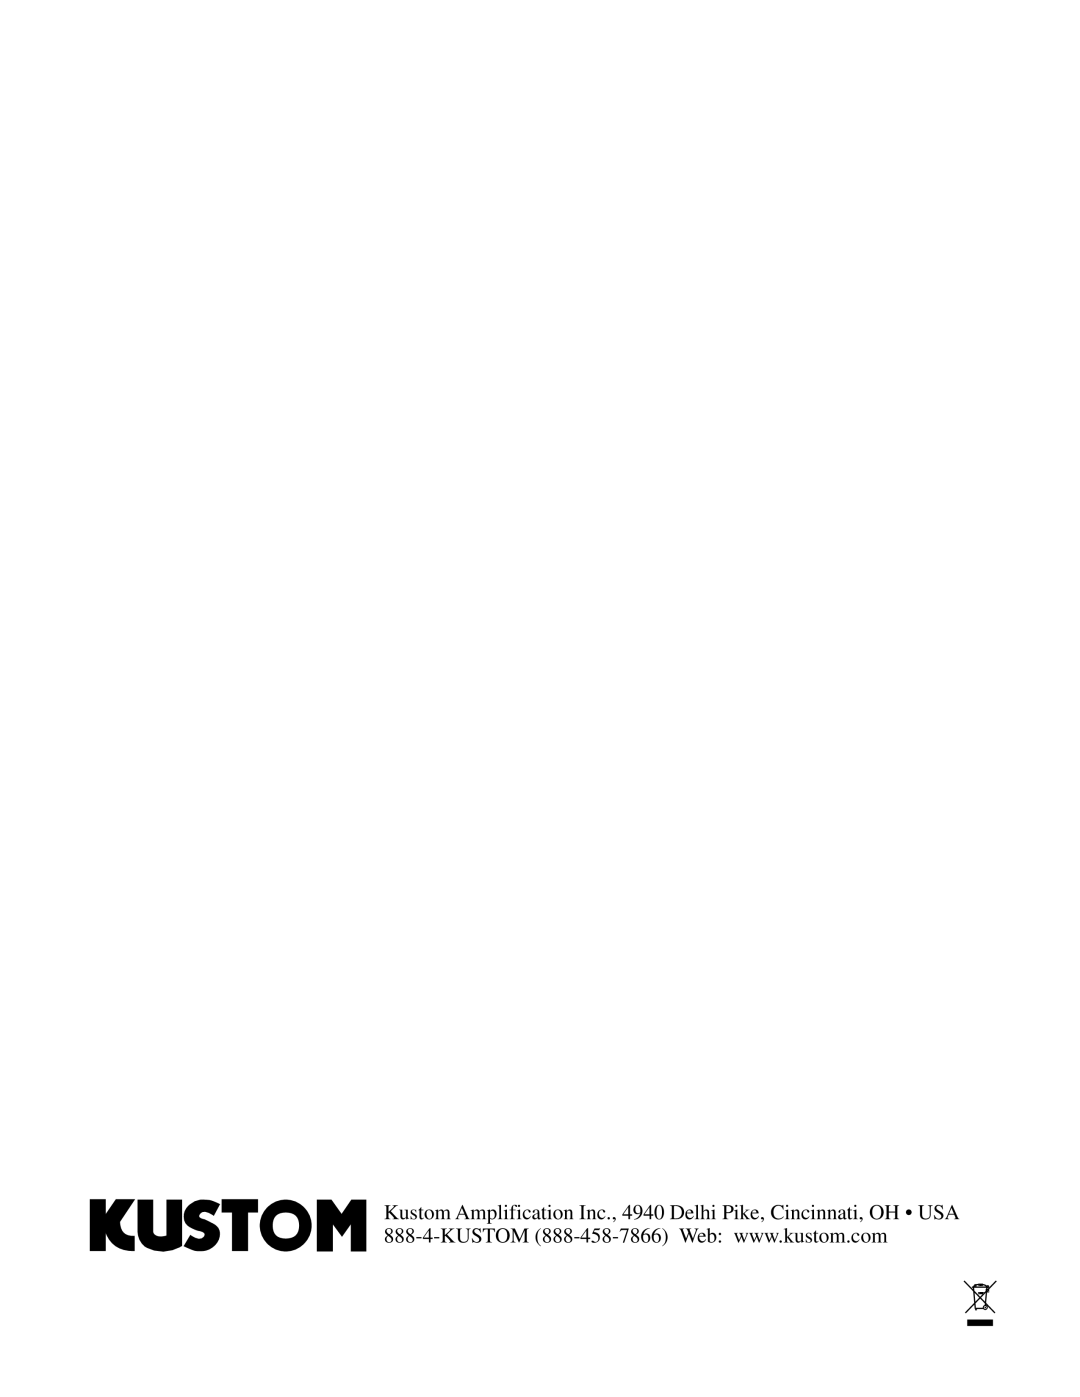 Kustom 12 Gauge owner manual Kustom Amplification Inc., 4940 Delhi Pike, Cincinnati, OH USA 